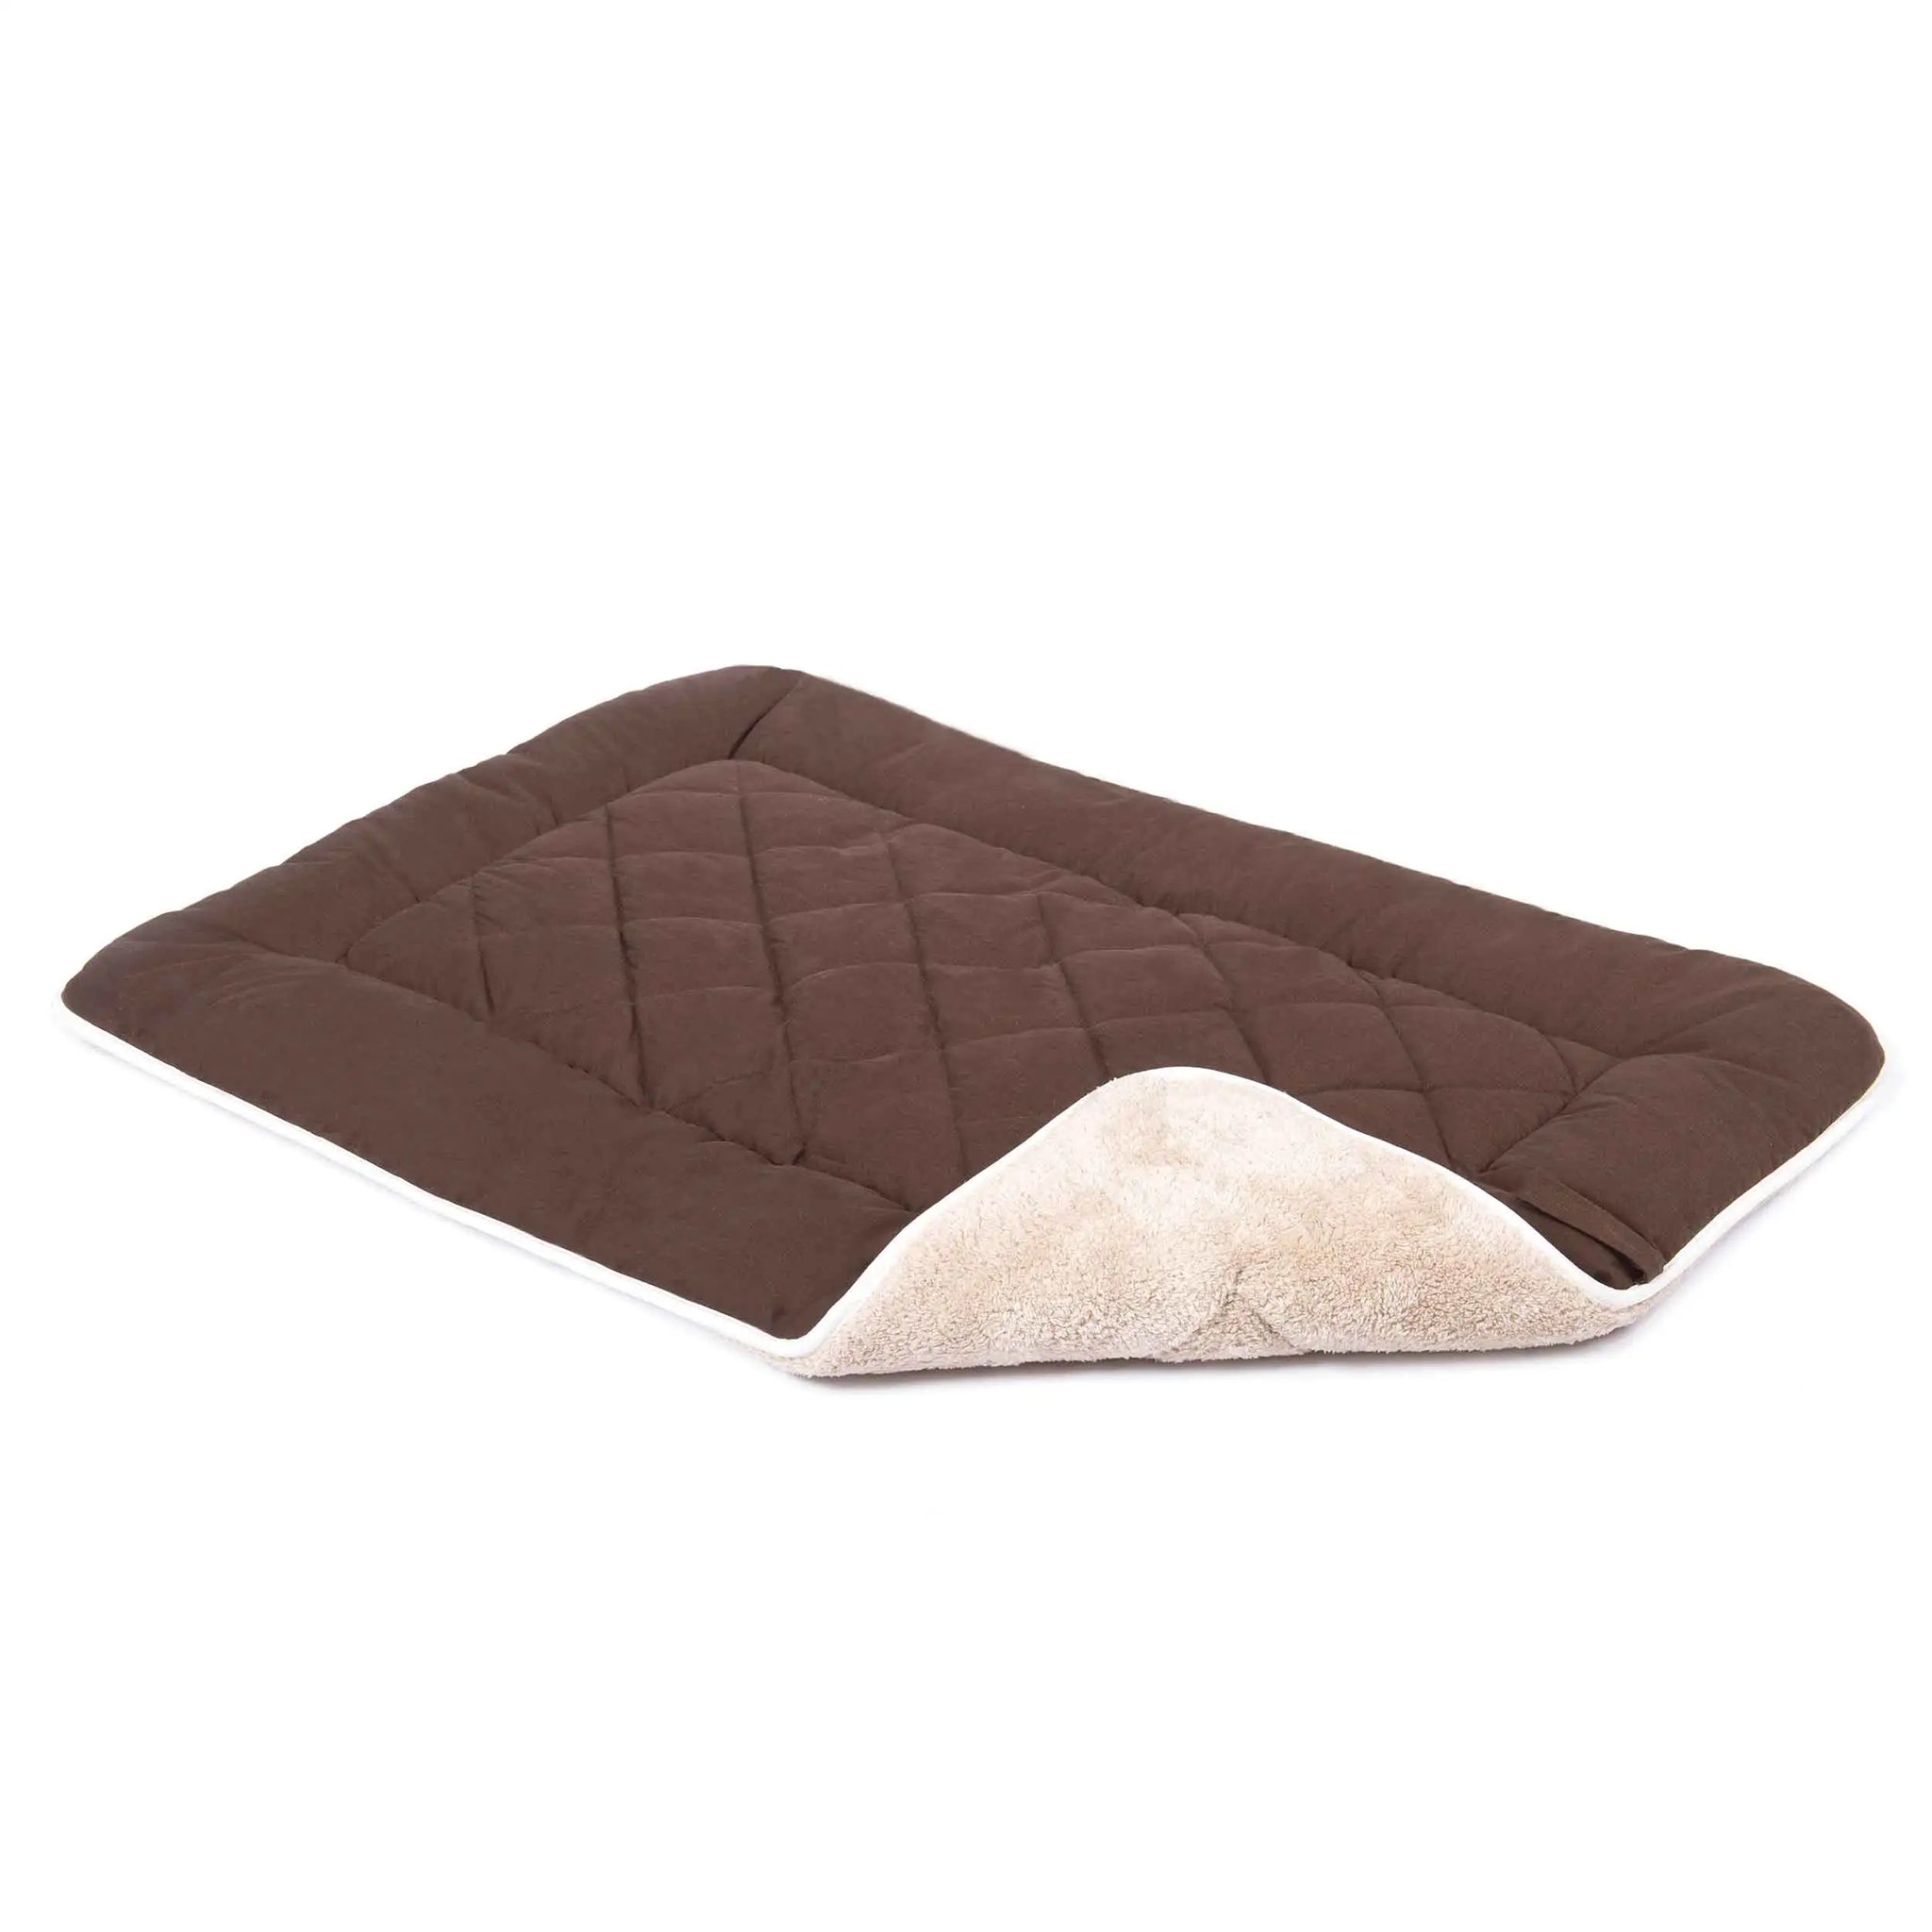 DGS Pet Products Pet Cotton Canvas Sleeper Cushion Large Espresso 23" x 36" x 1"